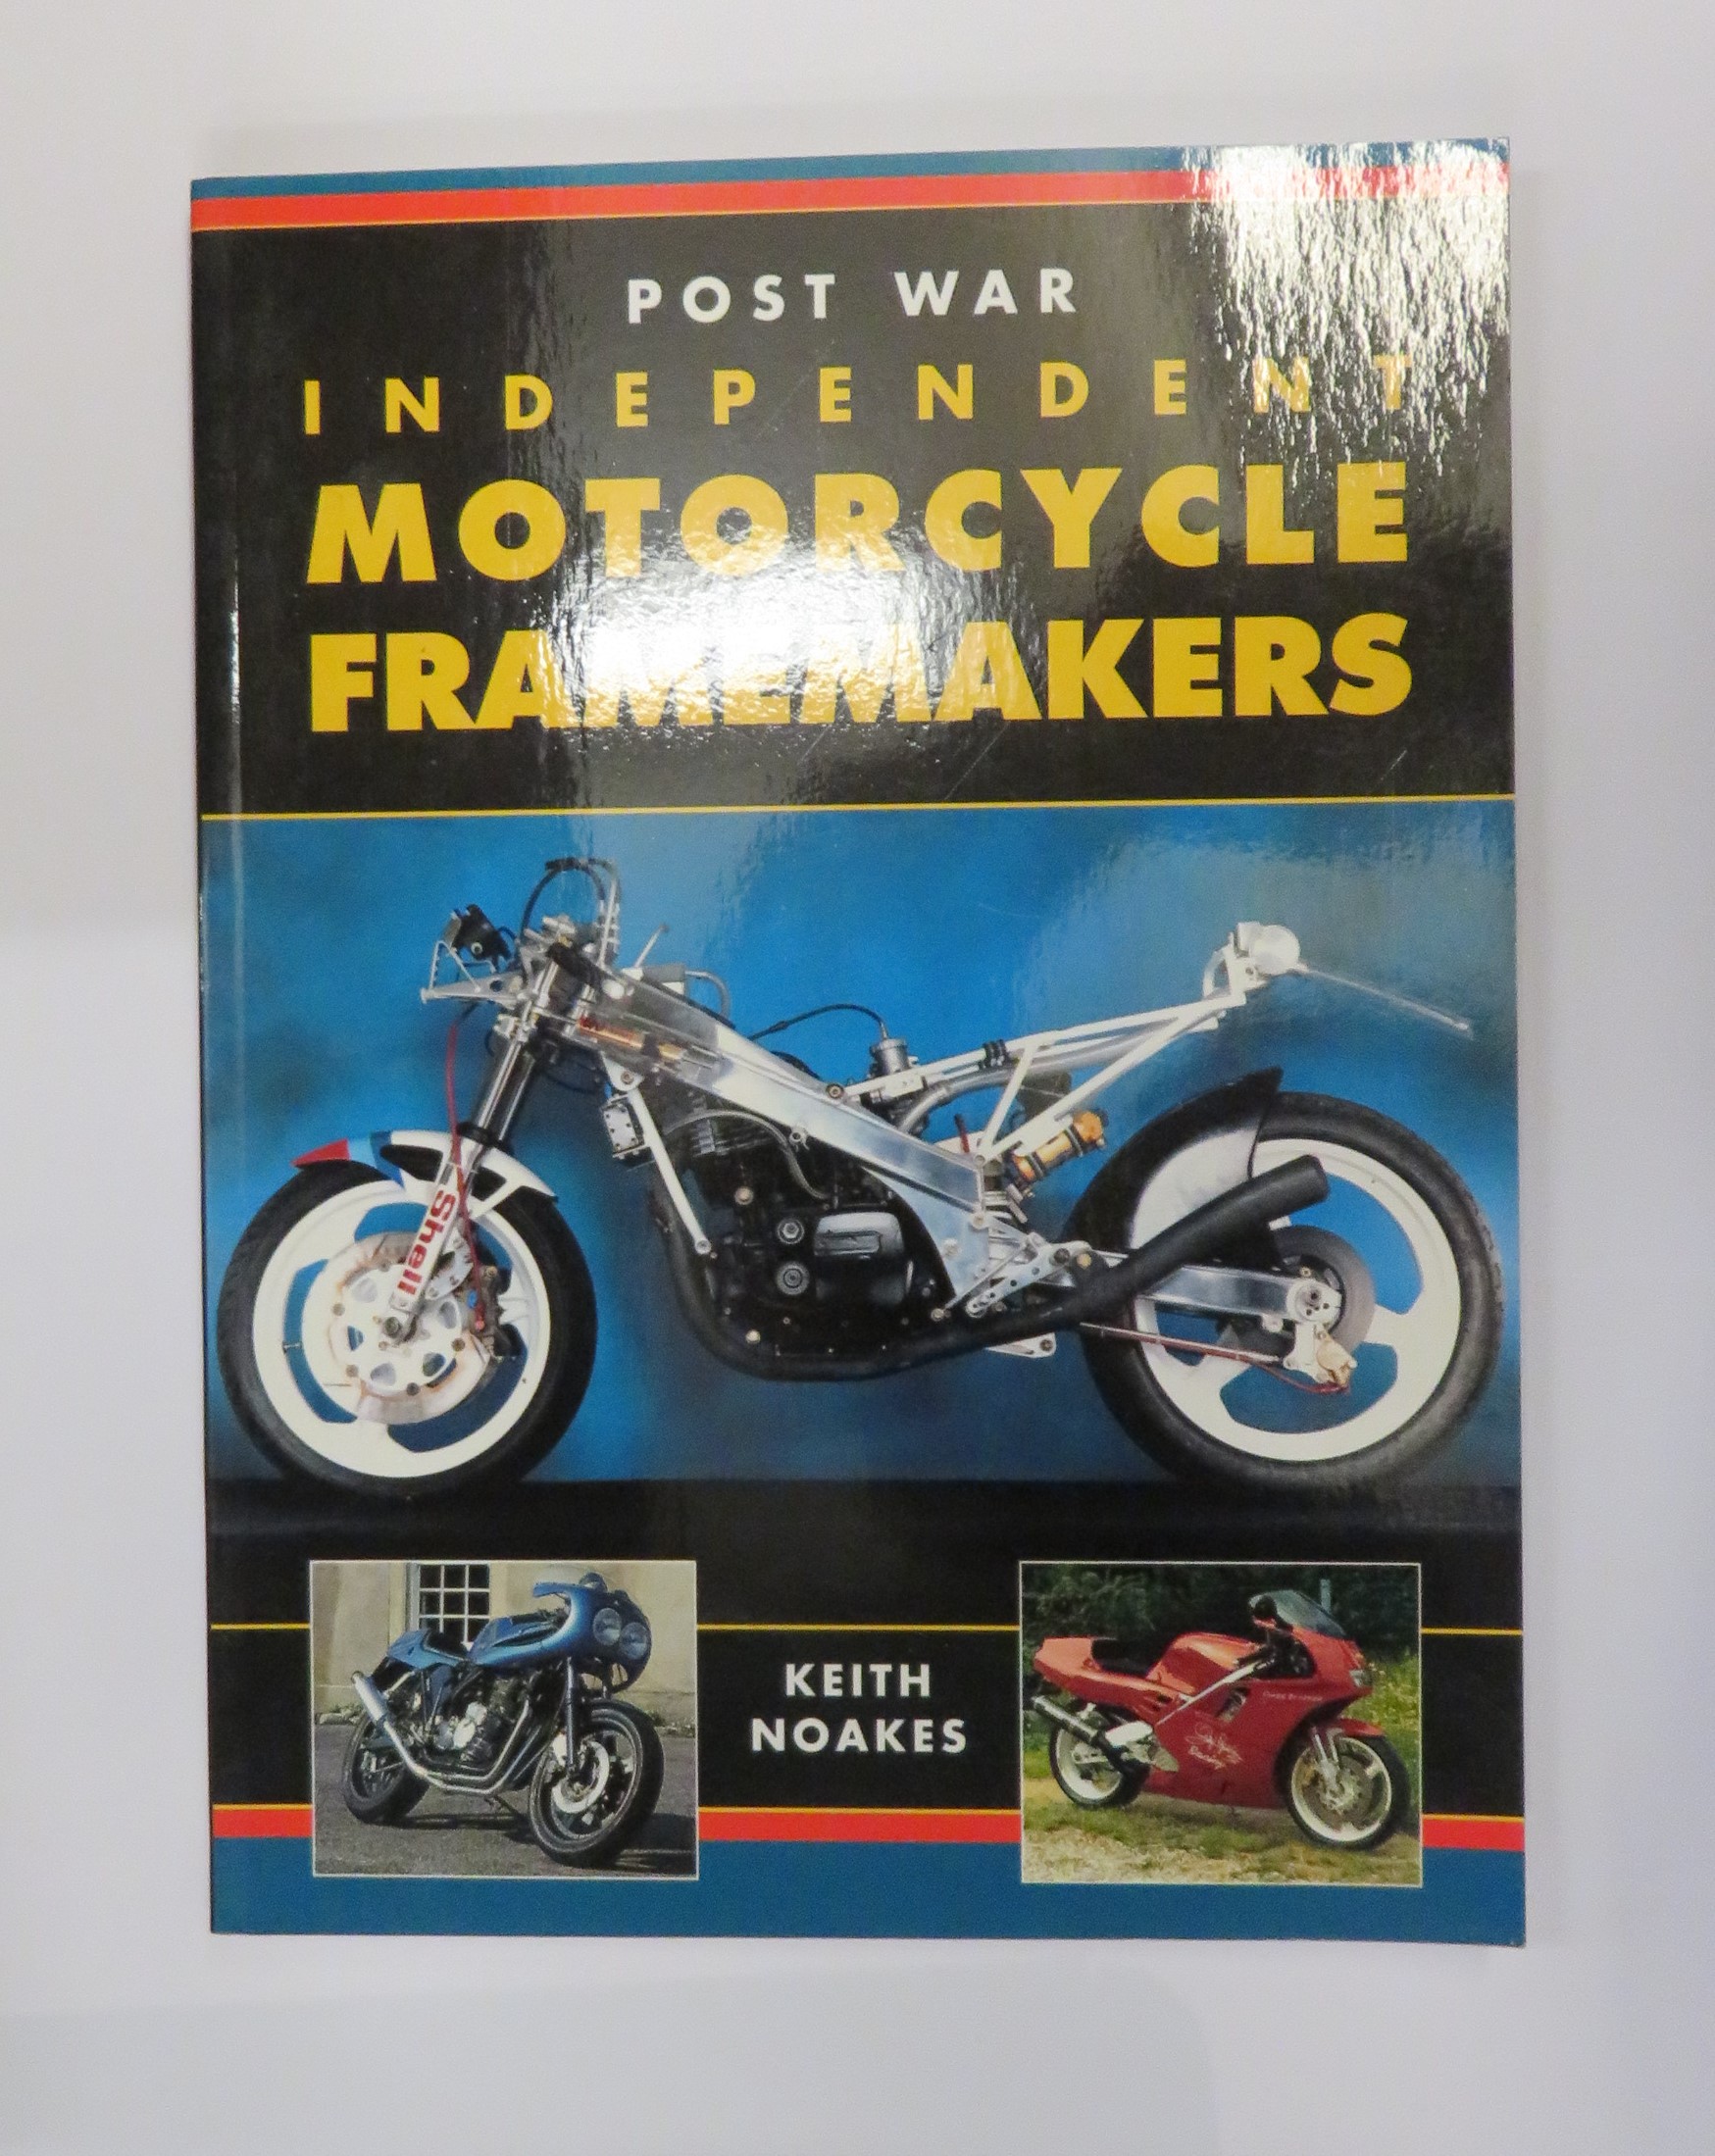 Post War Independent Motorcycles Framemakers